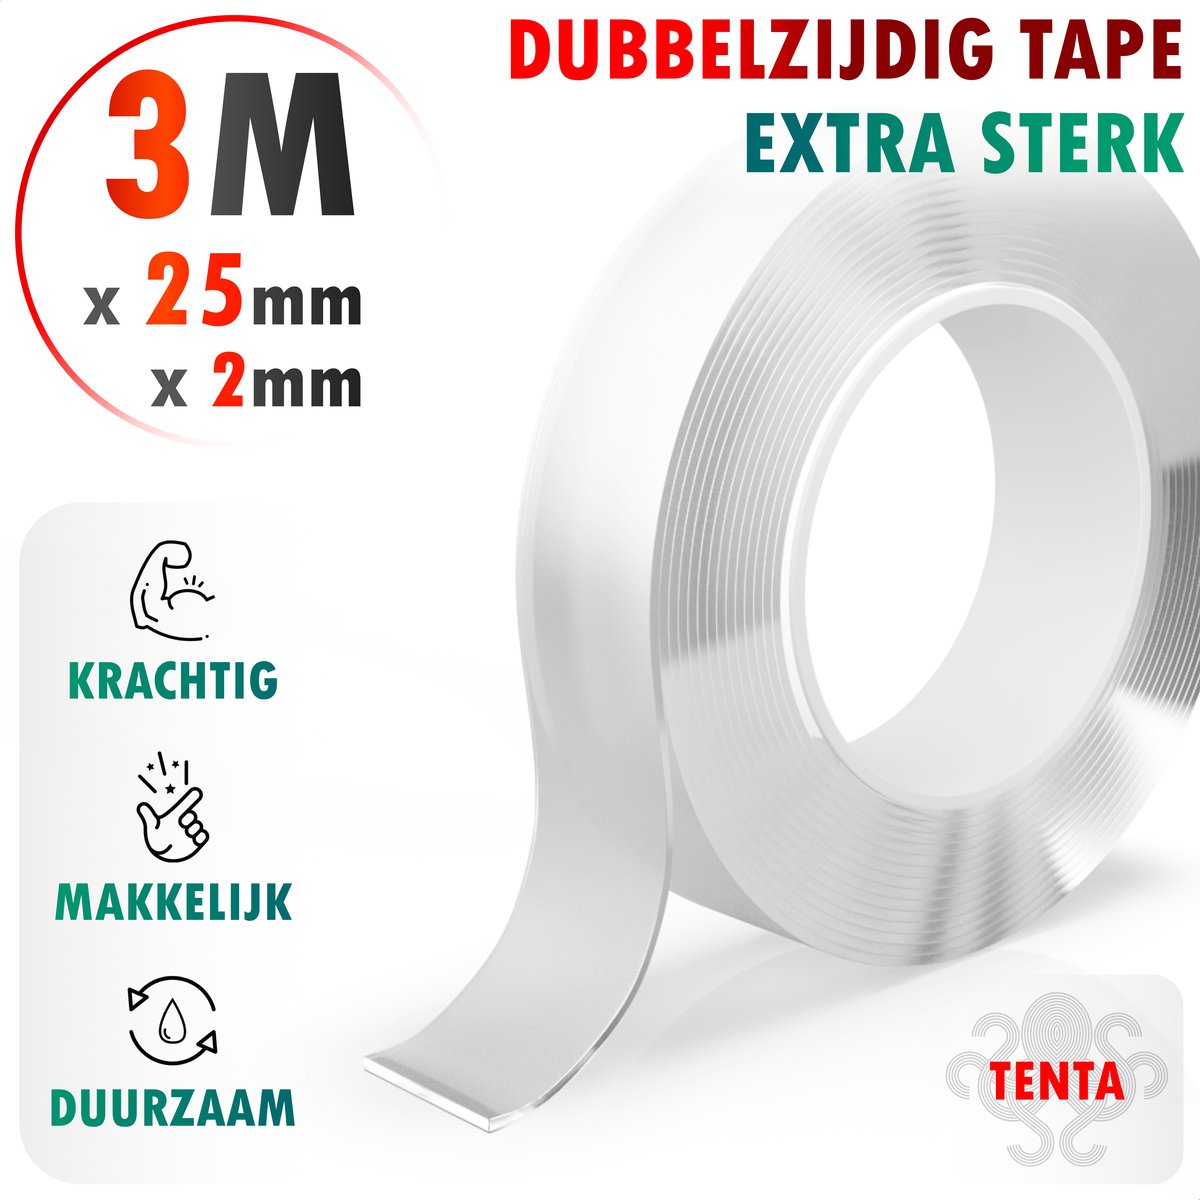 TENTA® Dubbelzijdig Tape Extra Sterk - Krachtig - Makkelijk - Duurzaam - 3m  x 25mm x 2mm | bol.com